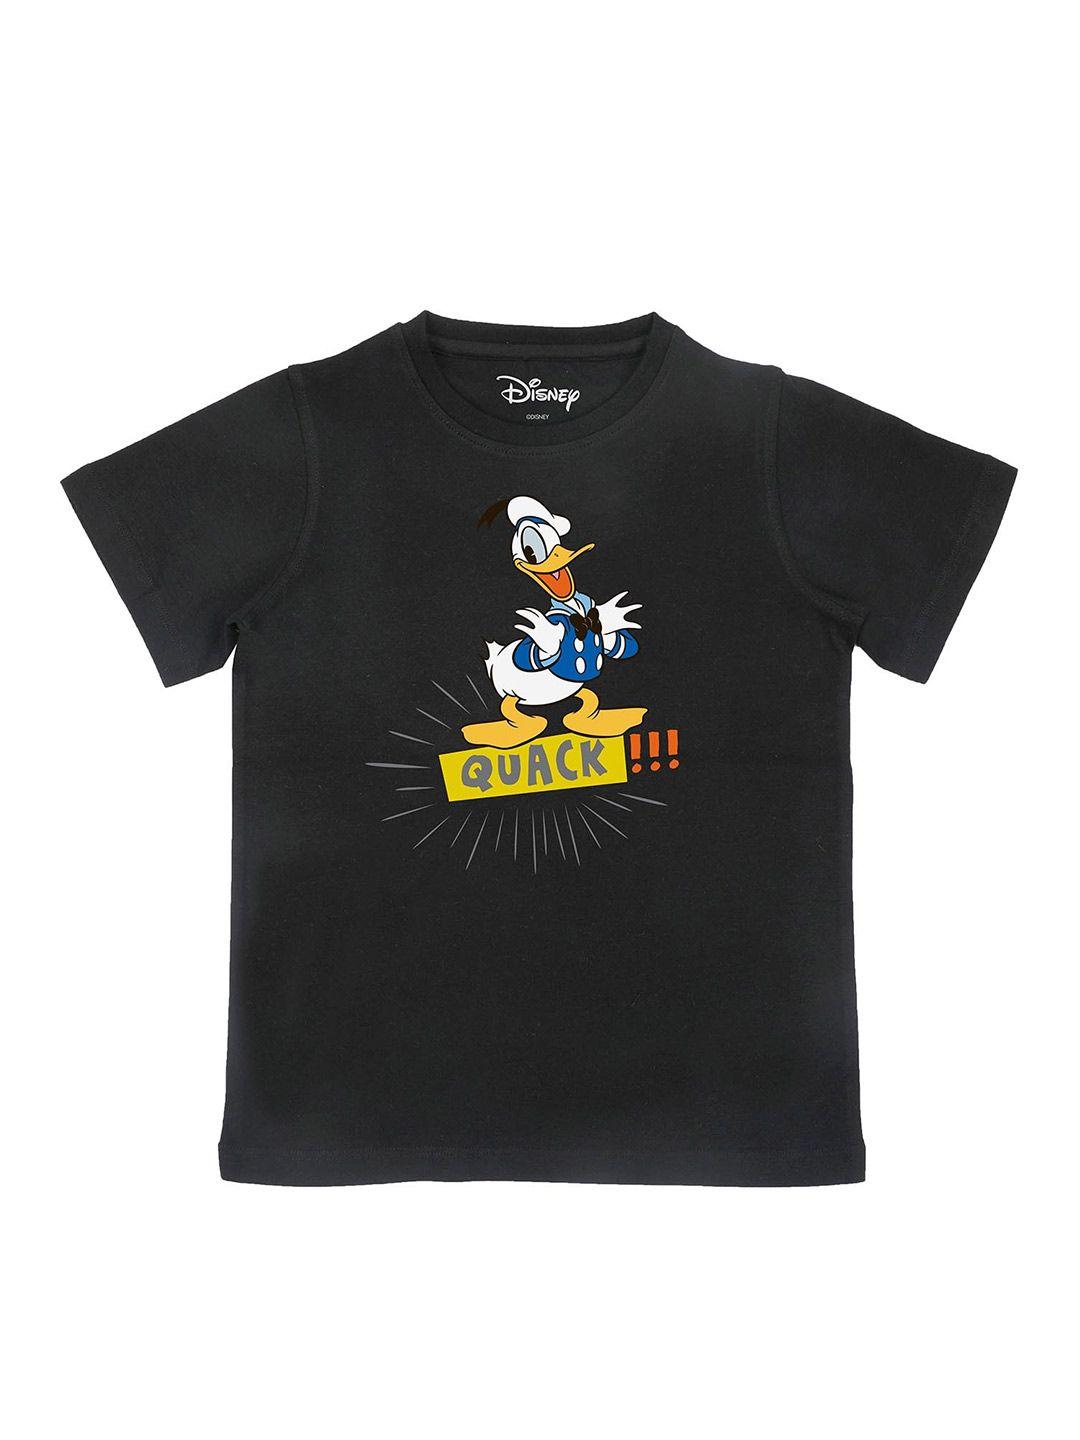 disney by wear your mind boys black donald duck printed applique t-shirt